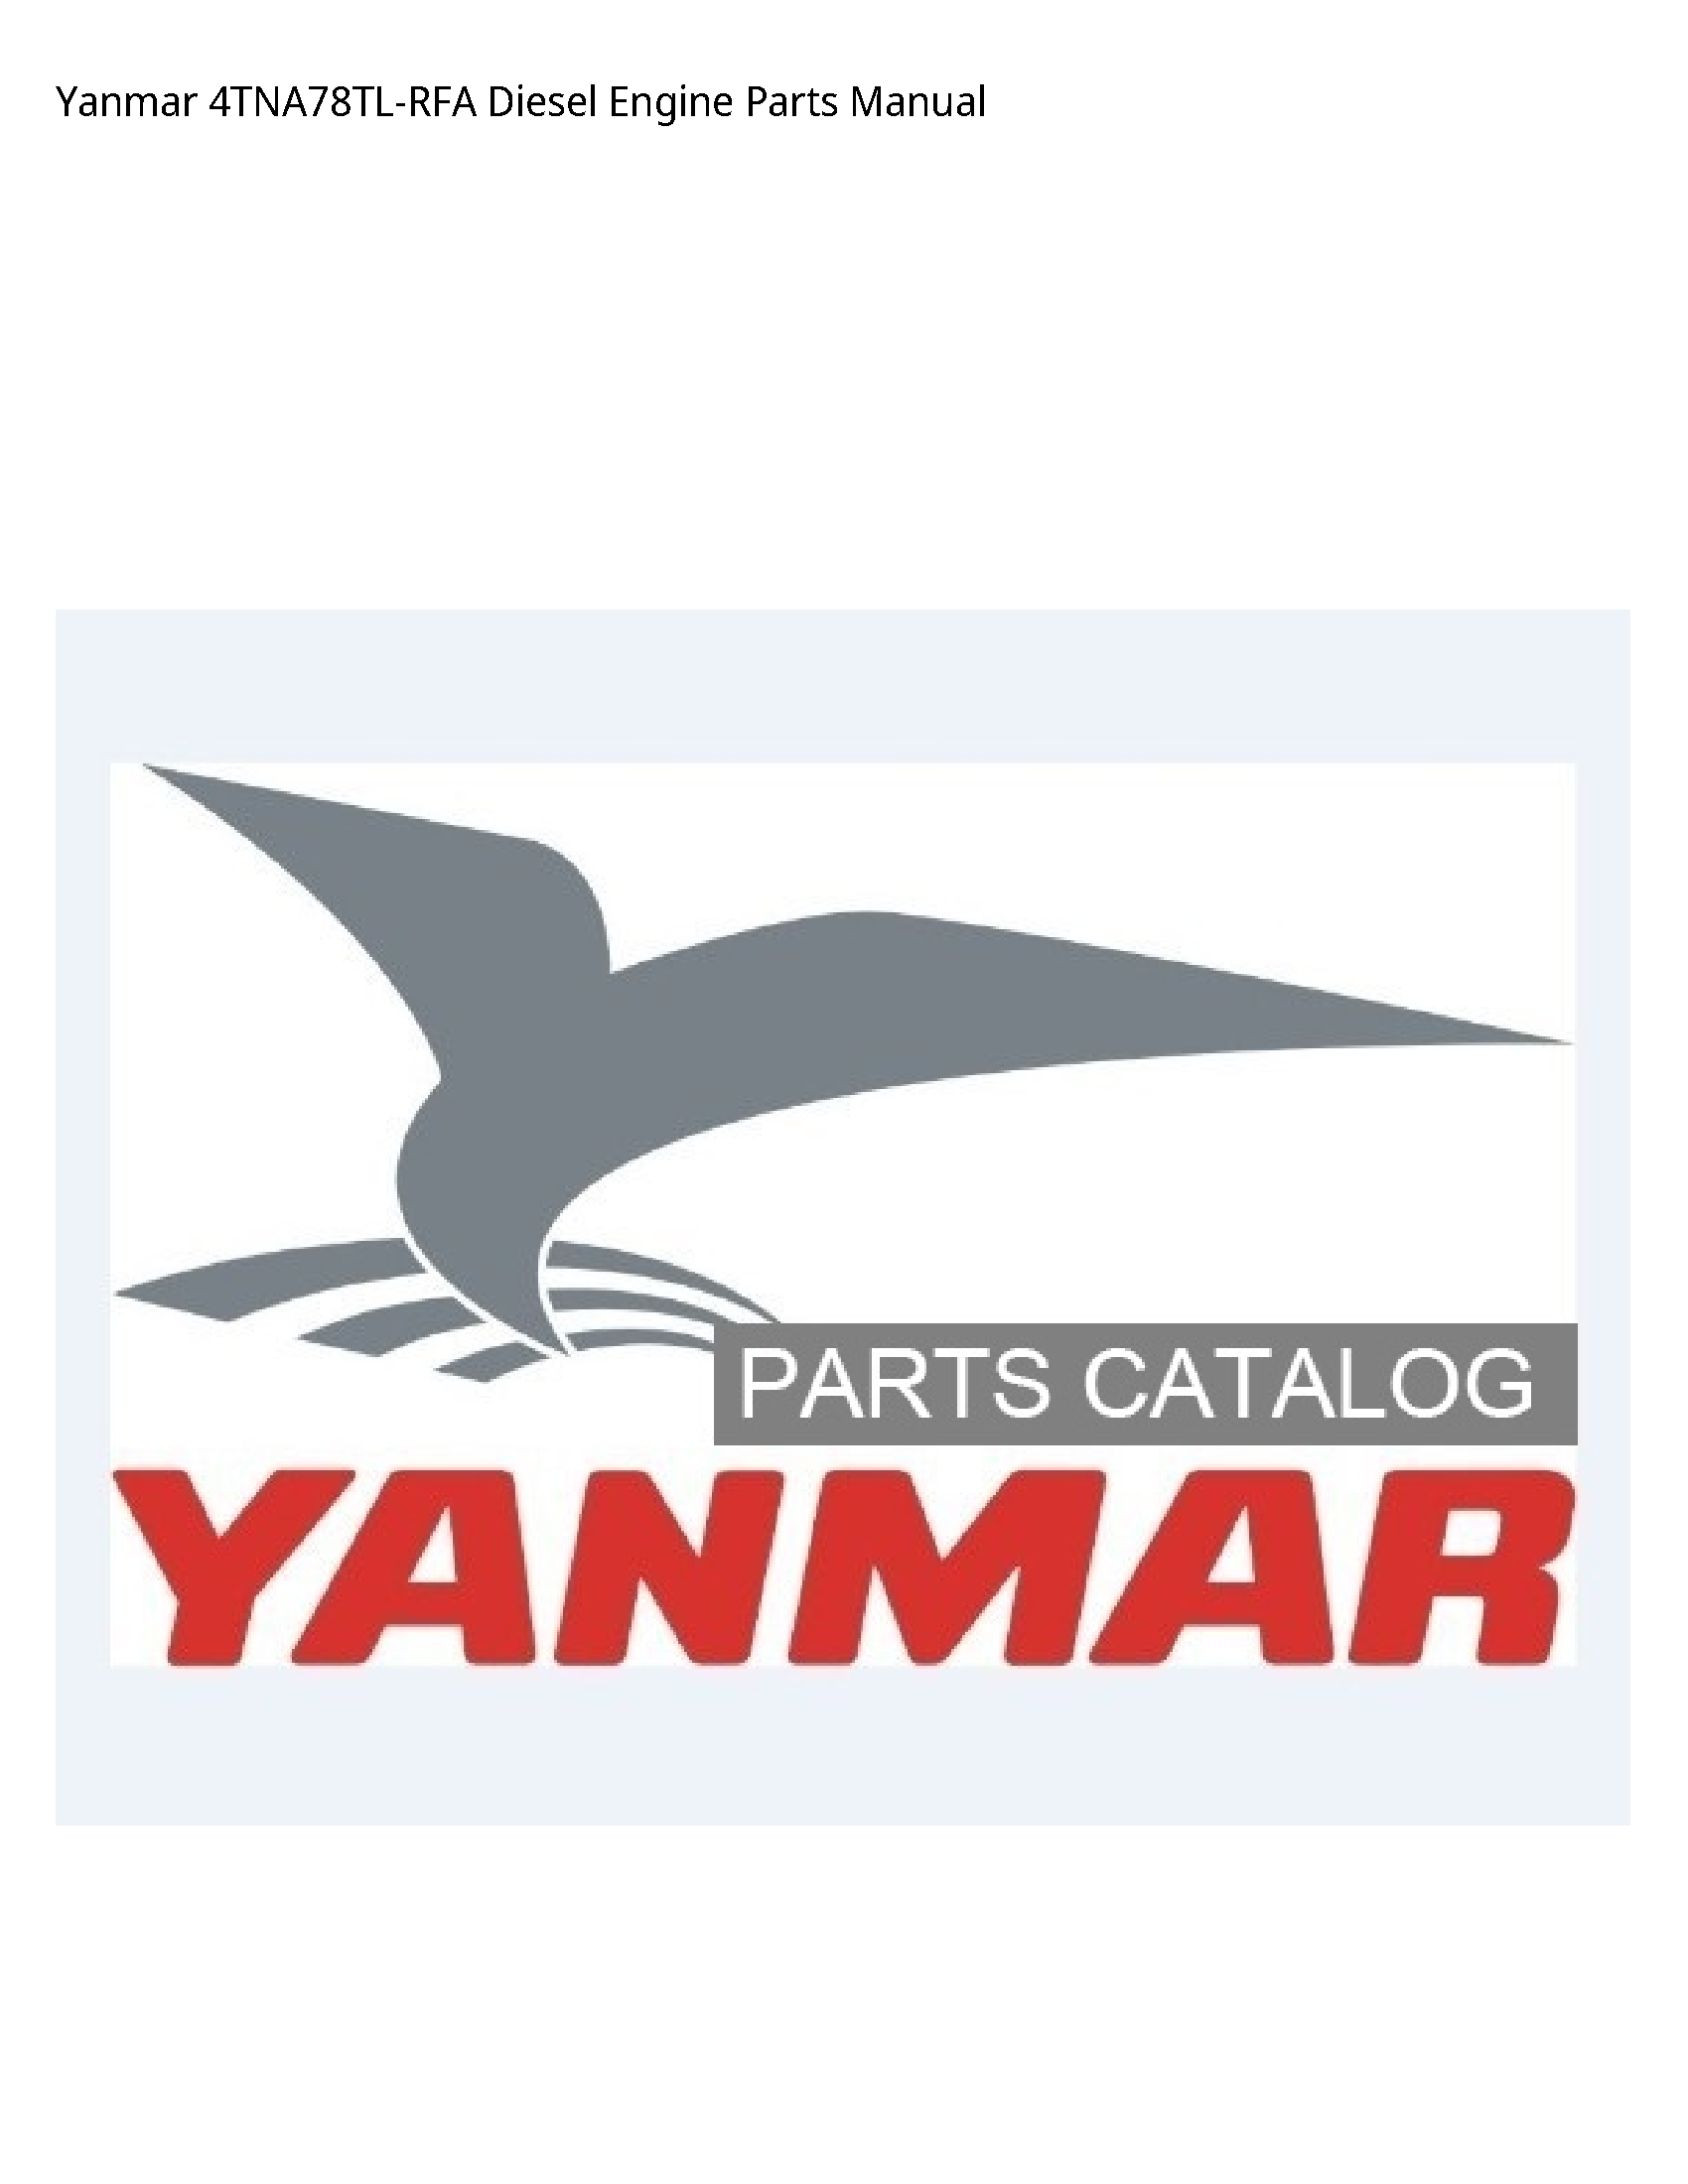 Yanmar 4TNA78TL-RFA Diesel Engine Parts manual